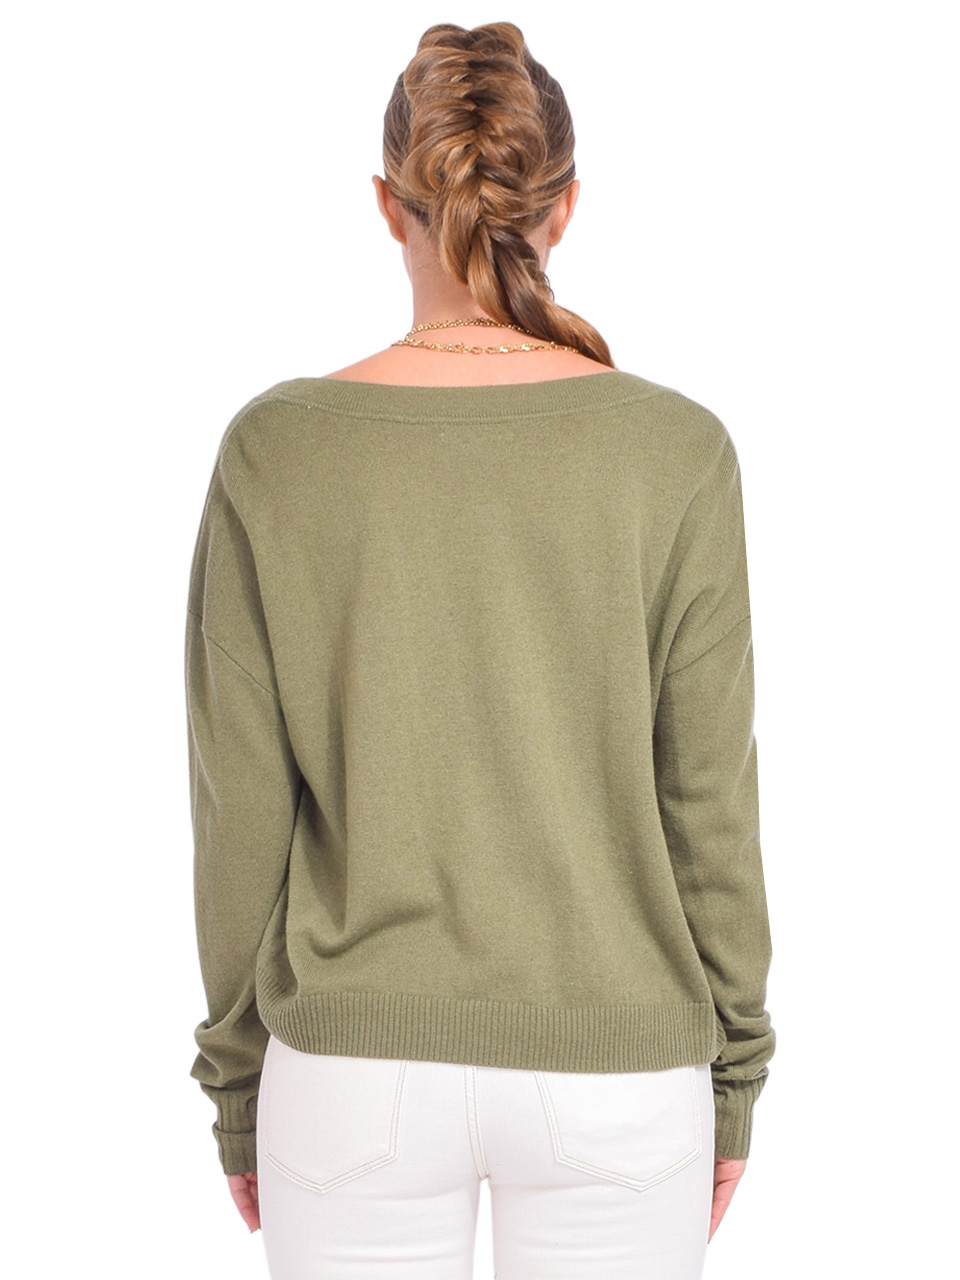 SERRA The Easy V-Neck Sweater in Olive Oil Back View 

